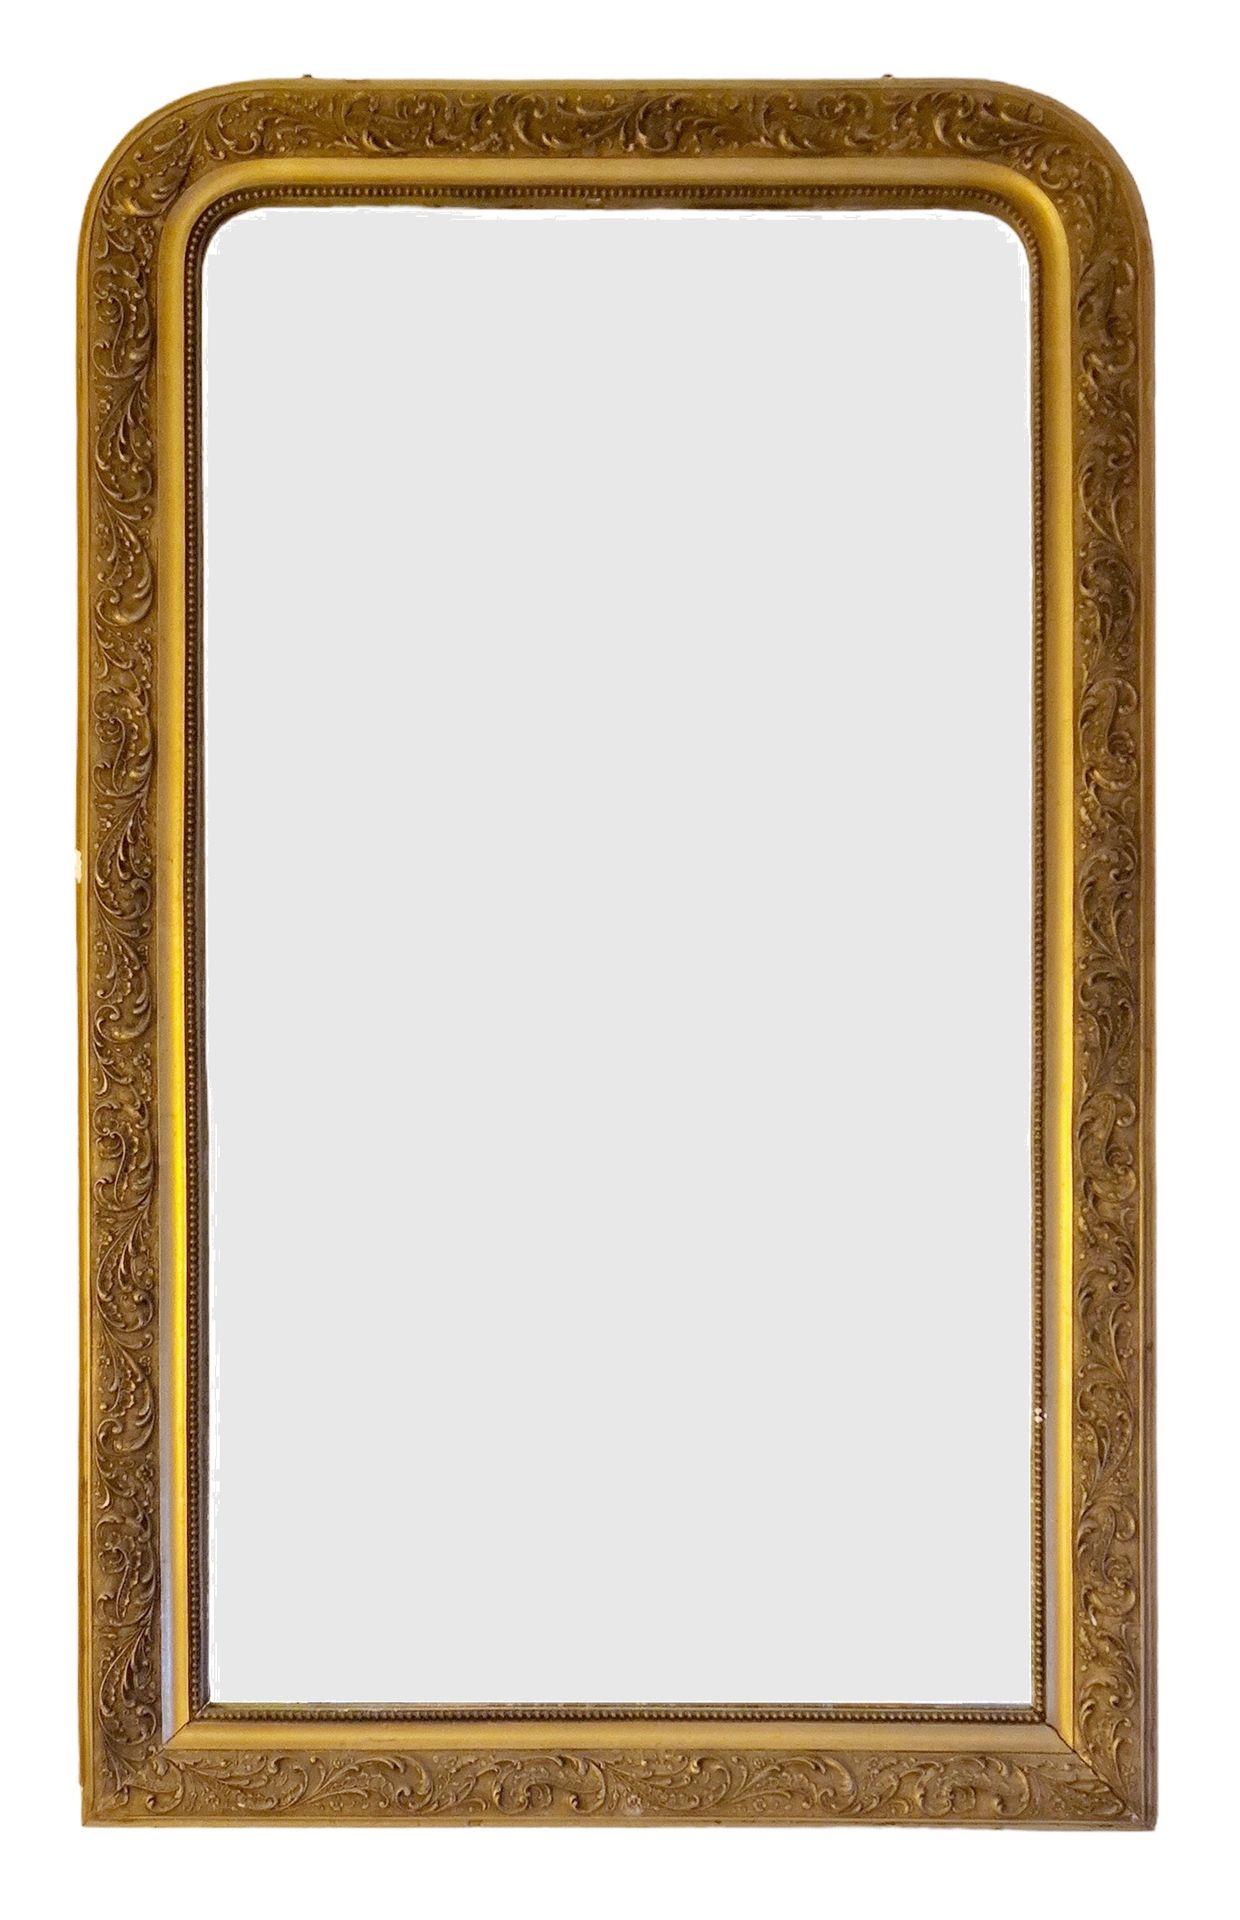 MIROIR DE CHEMINEE, ca. 1920 木质和镀金灰泥，有交错的浮雕装饰，上角为圆形。磨损和撕裂。

尺寸：140 x 83 cm